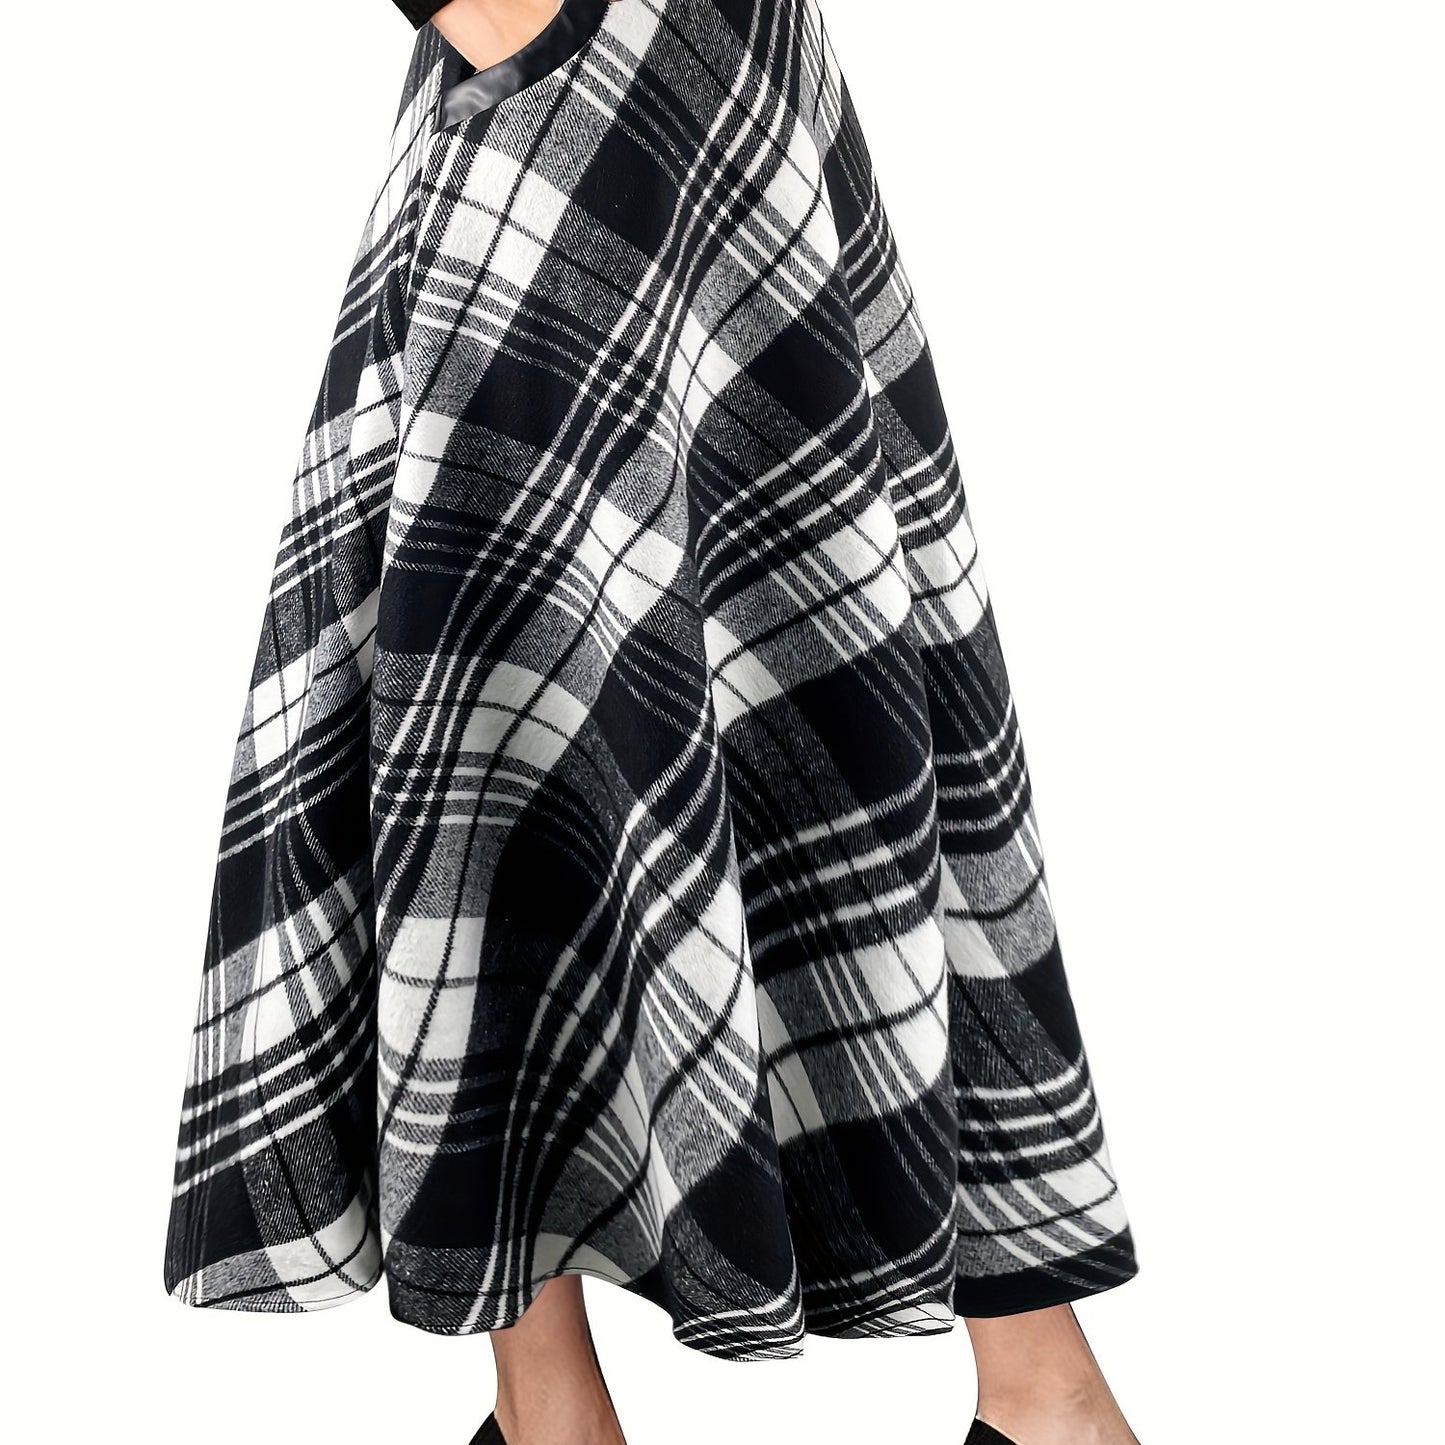 Plaid High Waist Maxi Skirt, Elegant Flared Warm Skirt For Fall & Winter, Women's Clothing